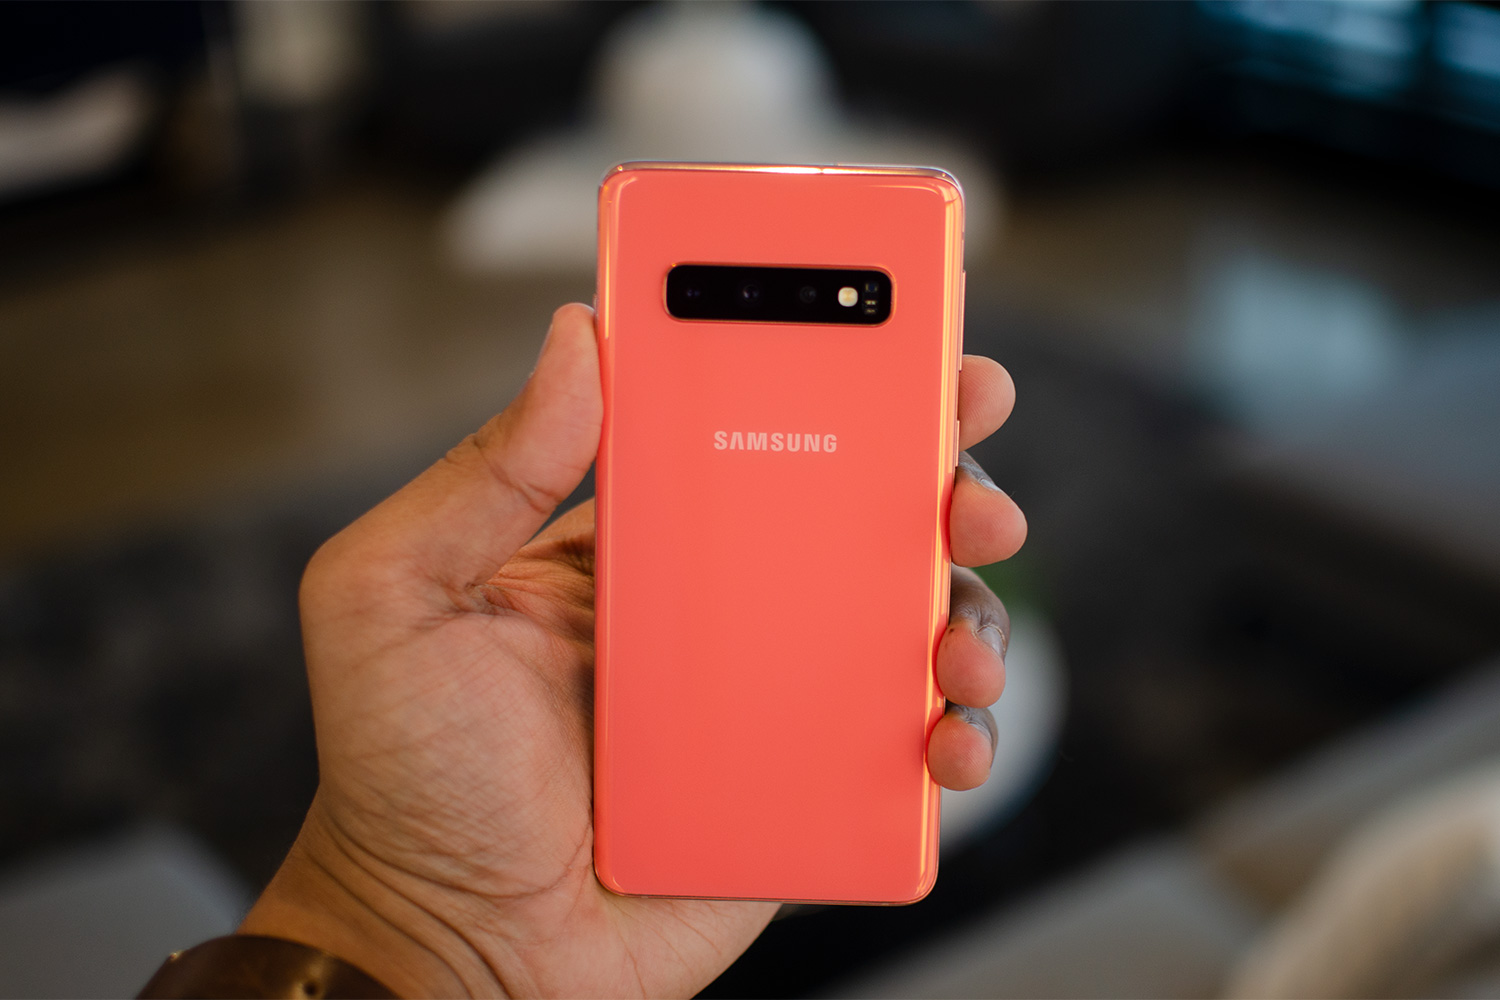 Samsung Galaxy S10 hands-on